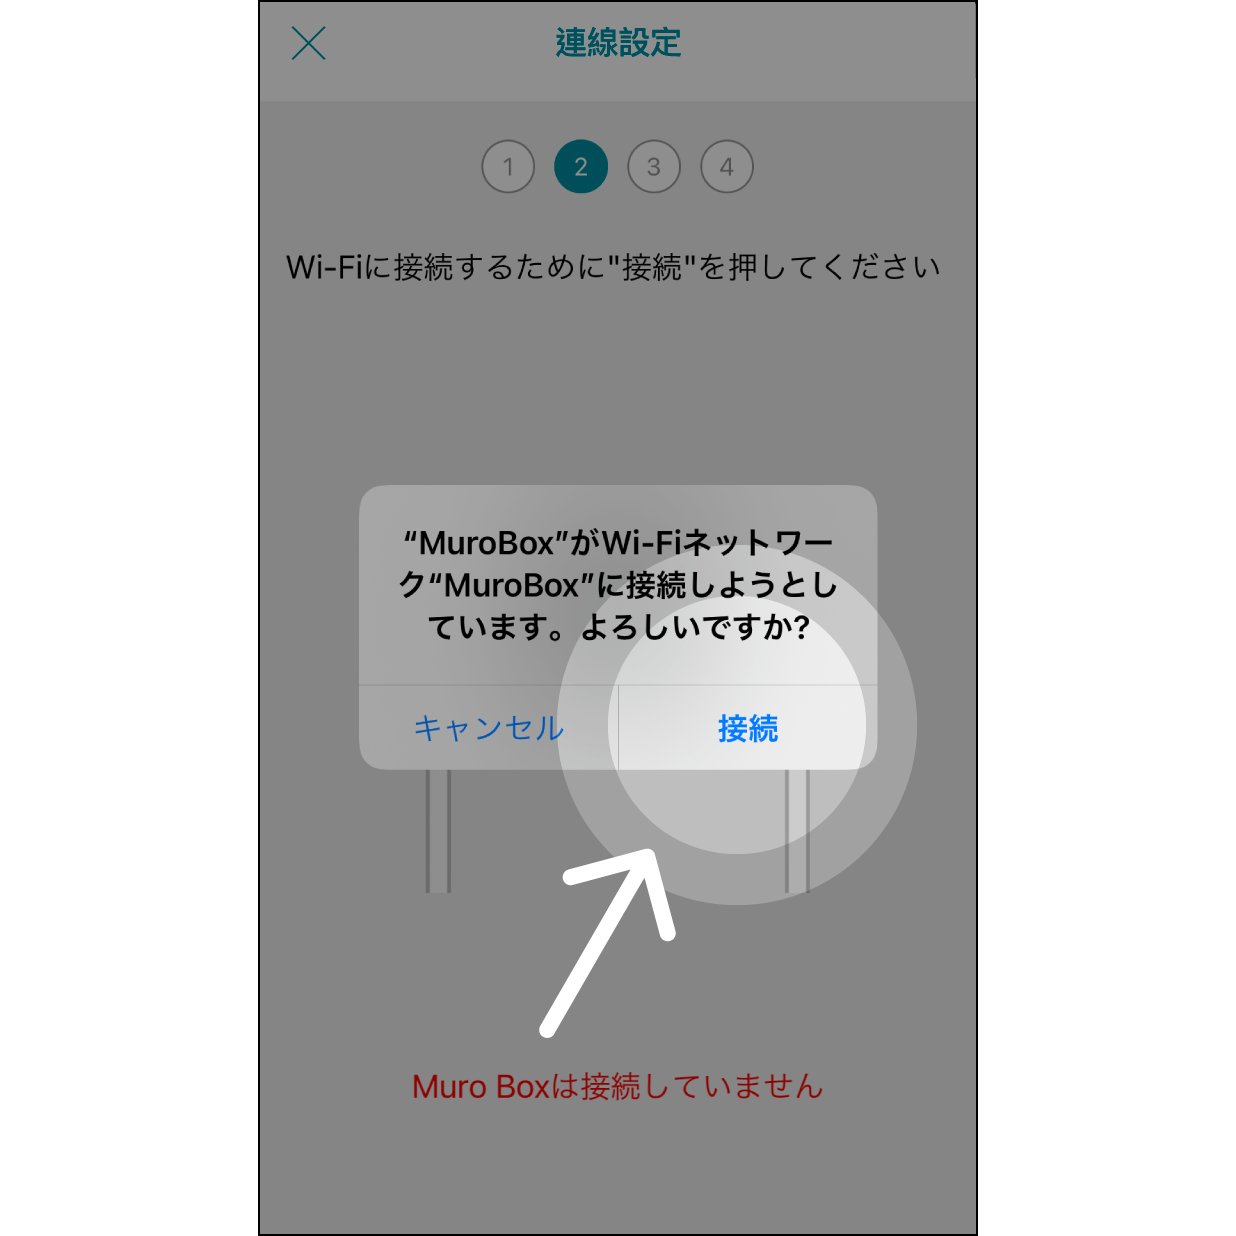 2. Muro BoxをWi-Fiに接続 (iOSユーザー） - Muro Box